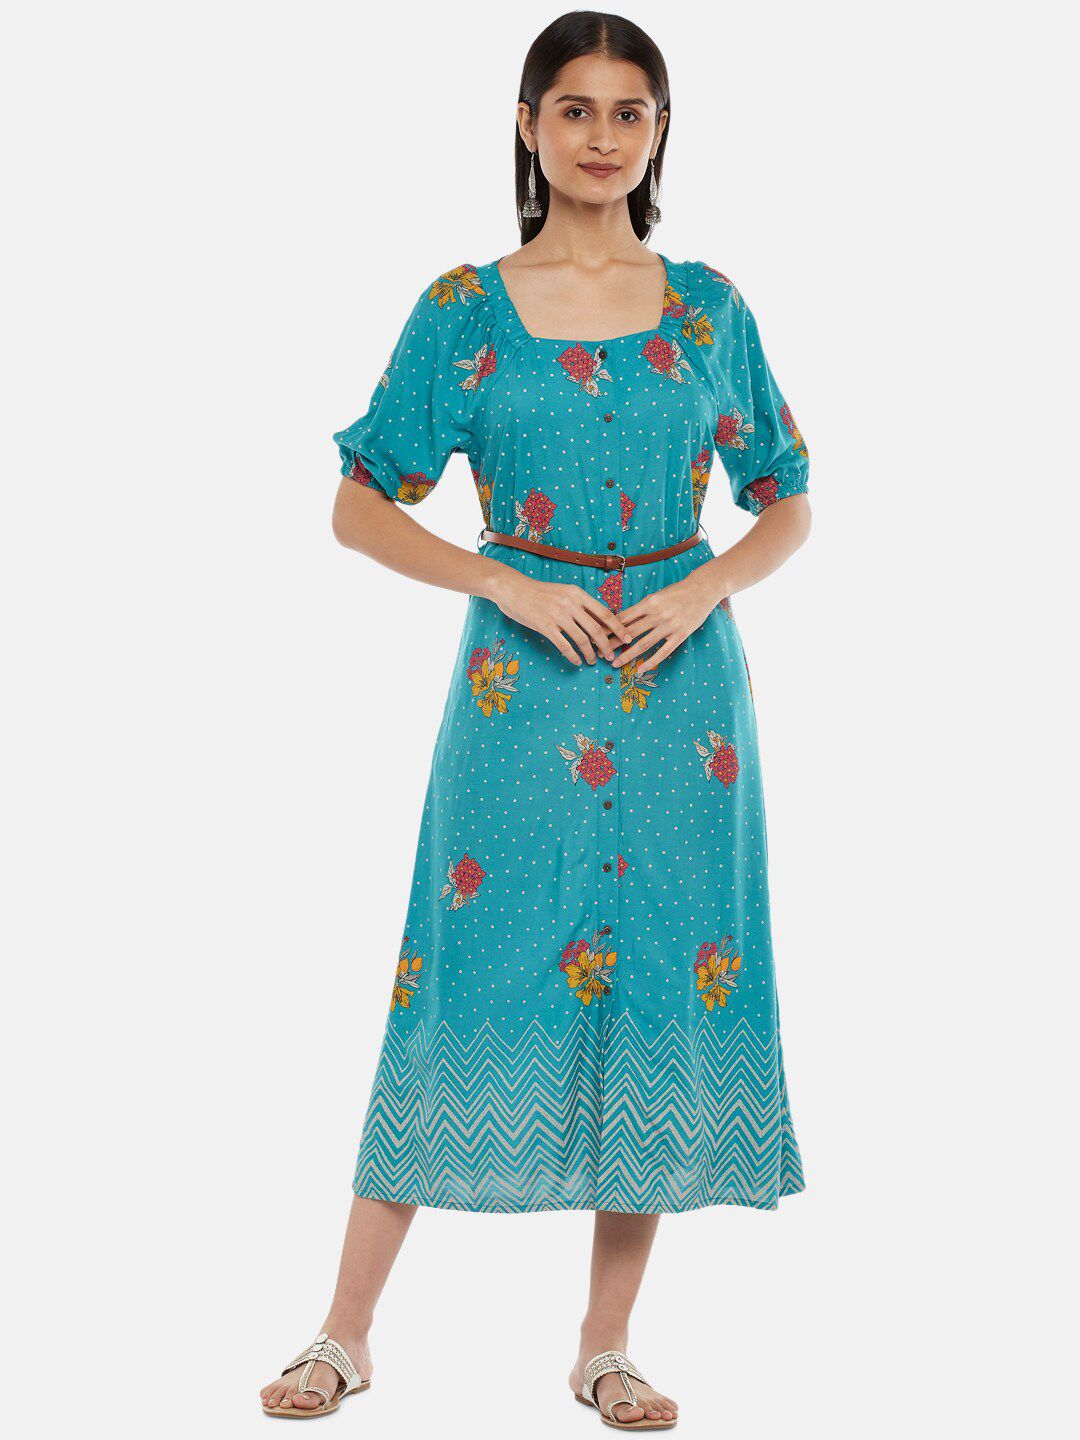 AKKRITI BY PANTALOONS Blue Floral Midi Dress Price in India